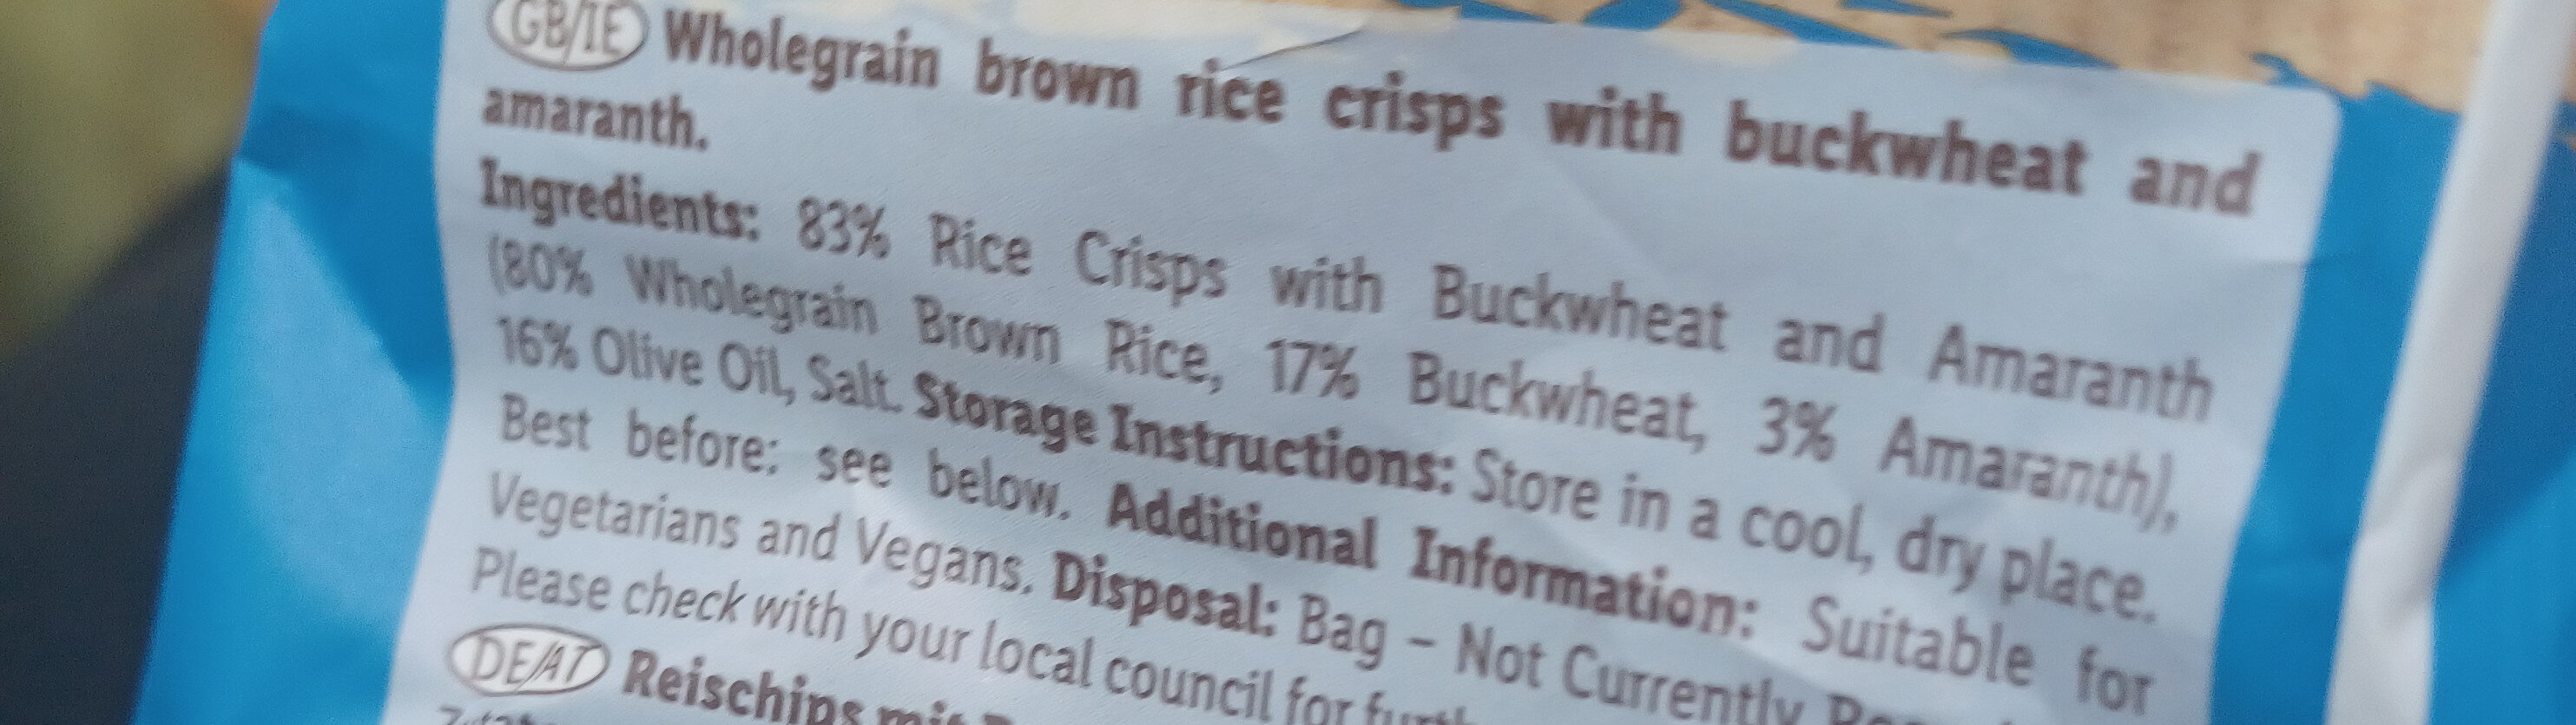 Brown Rice Crisps Buckwheat & Amarath - Ingrediënten - en